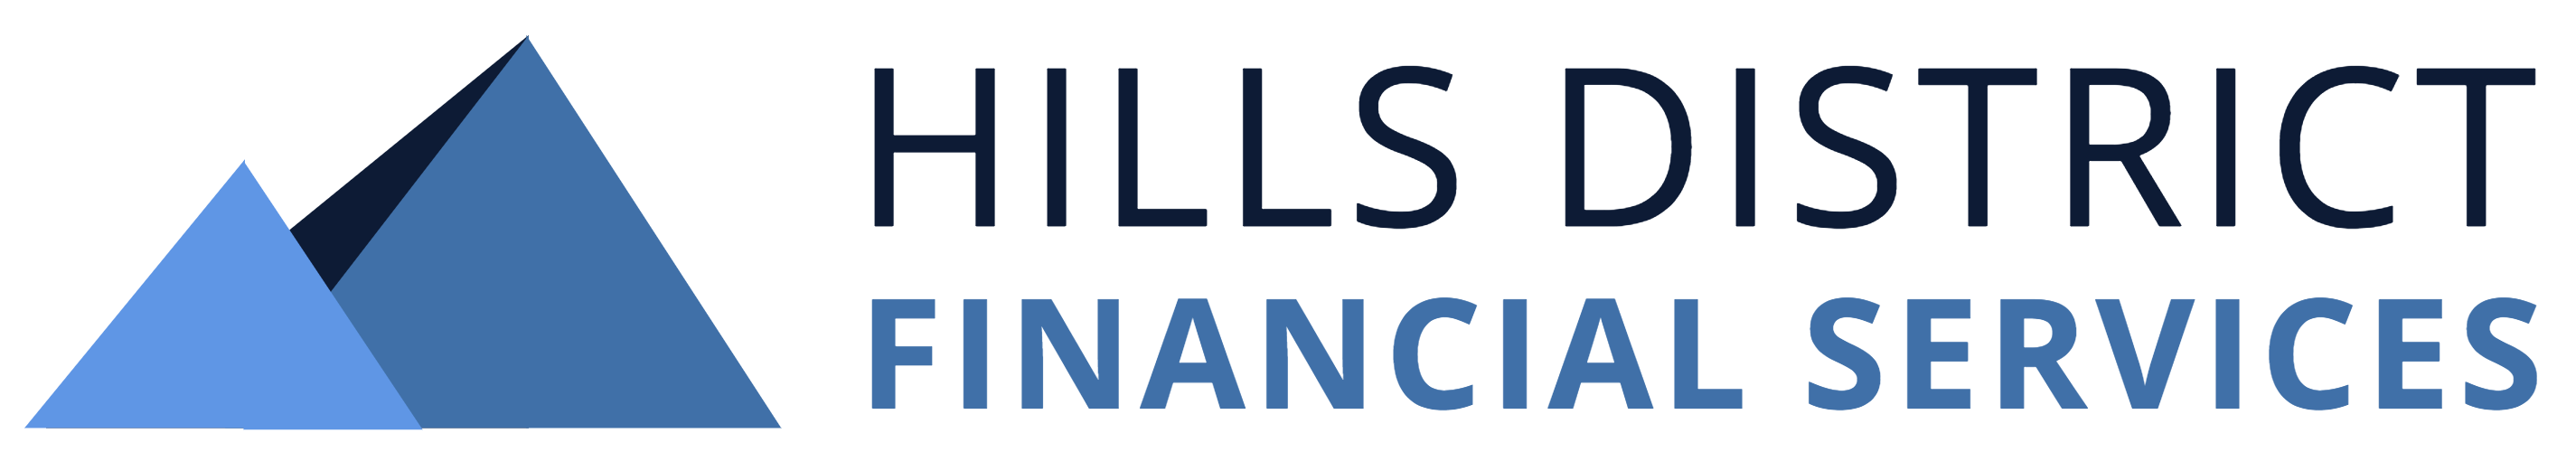 Hills District Financial Services